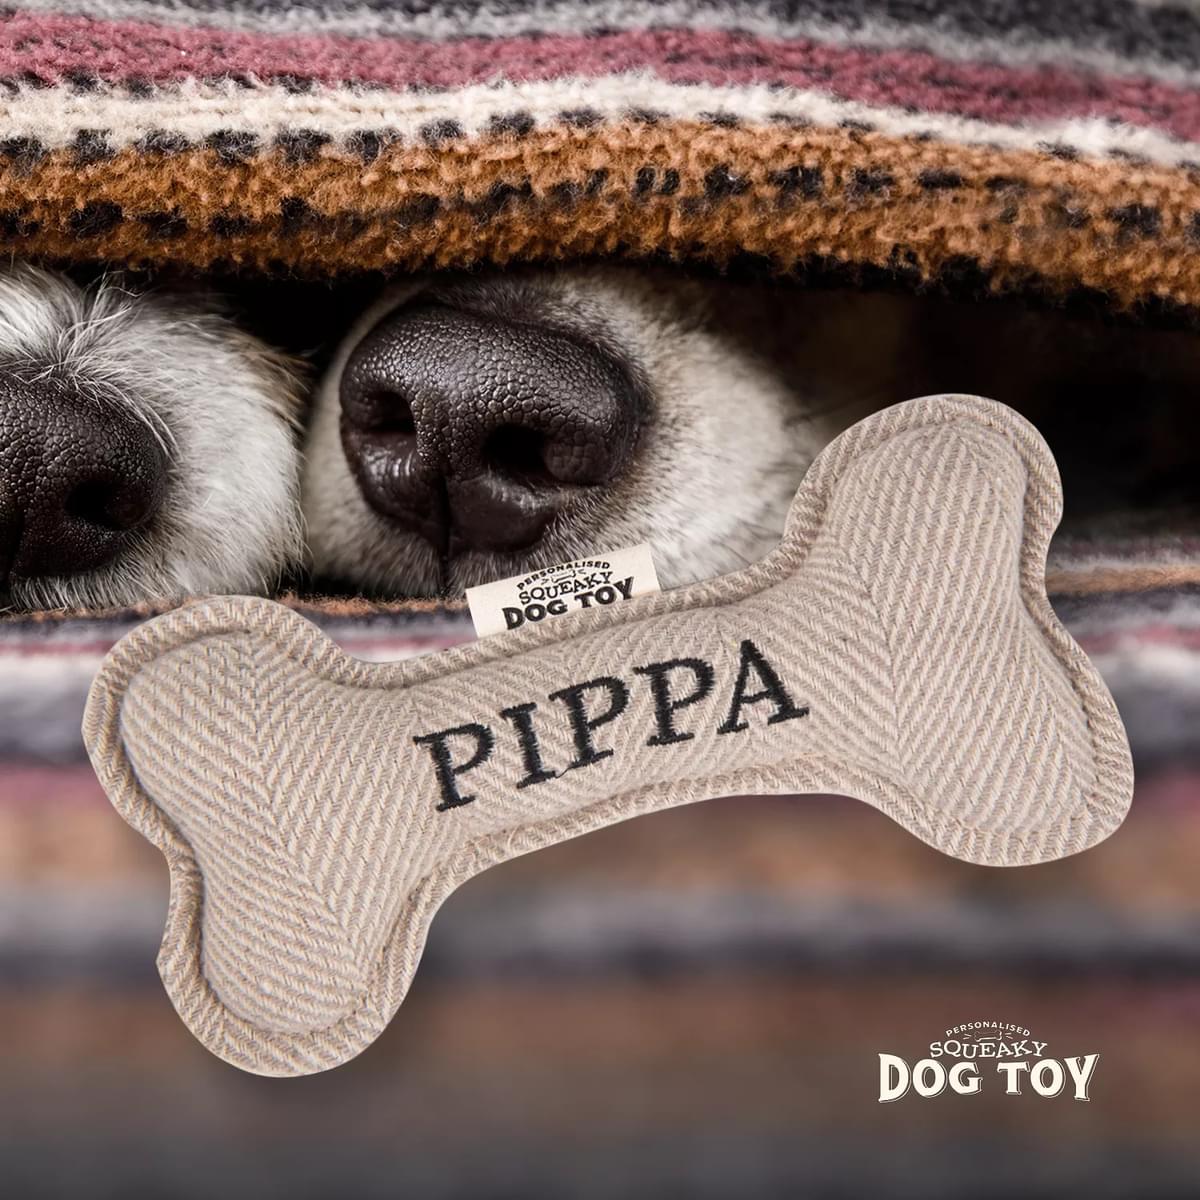 Named Squeaky Dog Toy- Pippa. Bone shaped herringbone tweed pattern dog toy. 